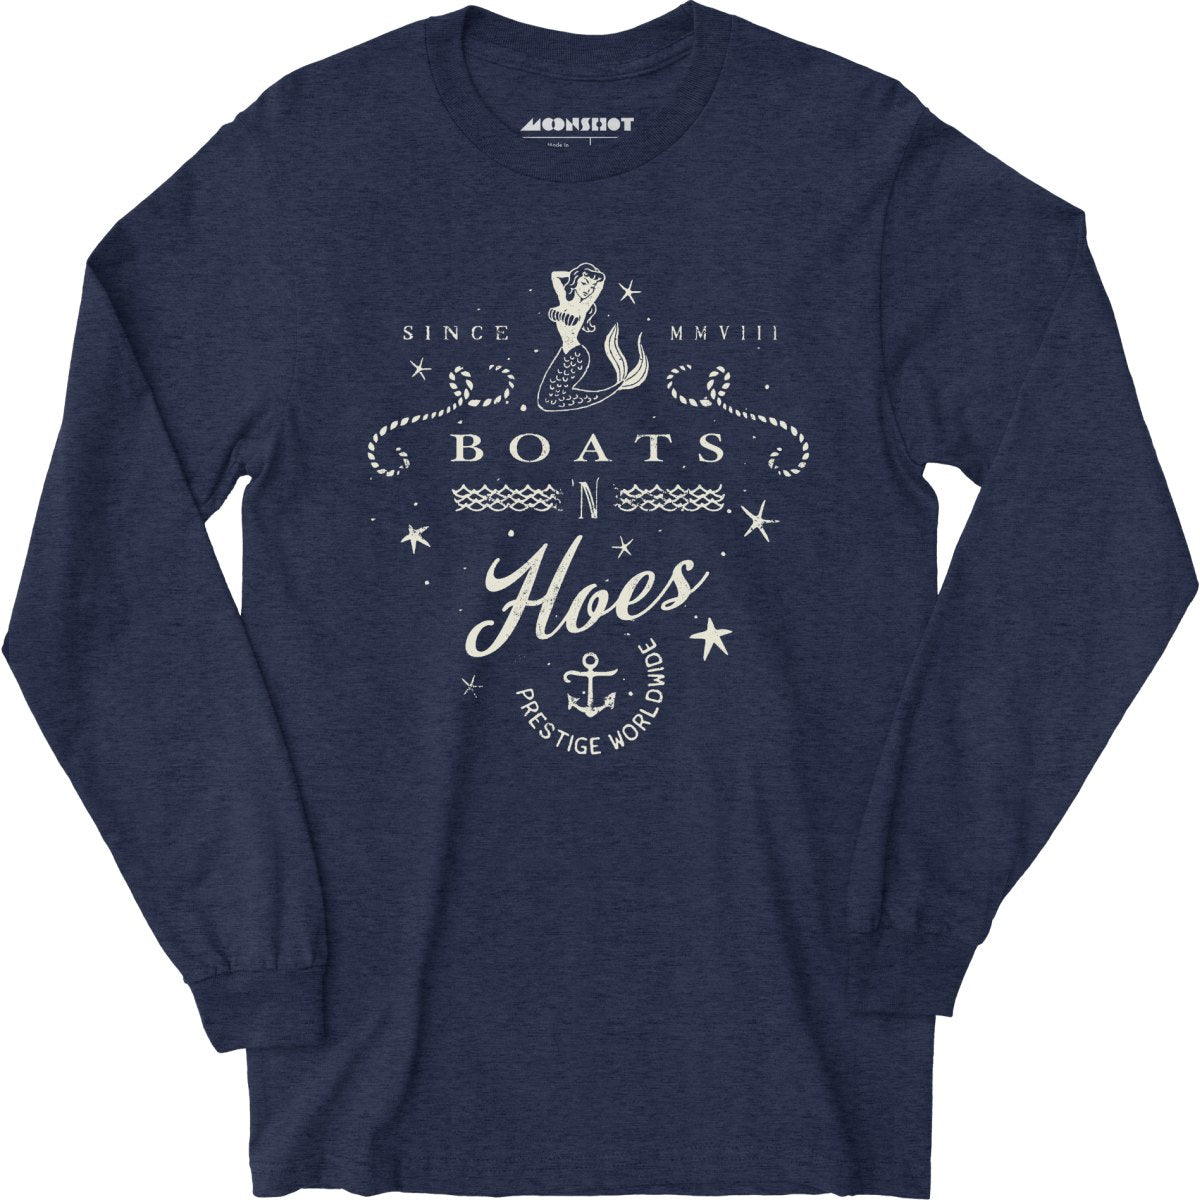 Boats n Hoes - Long Sleeve T-Shirt